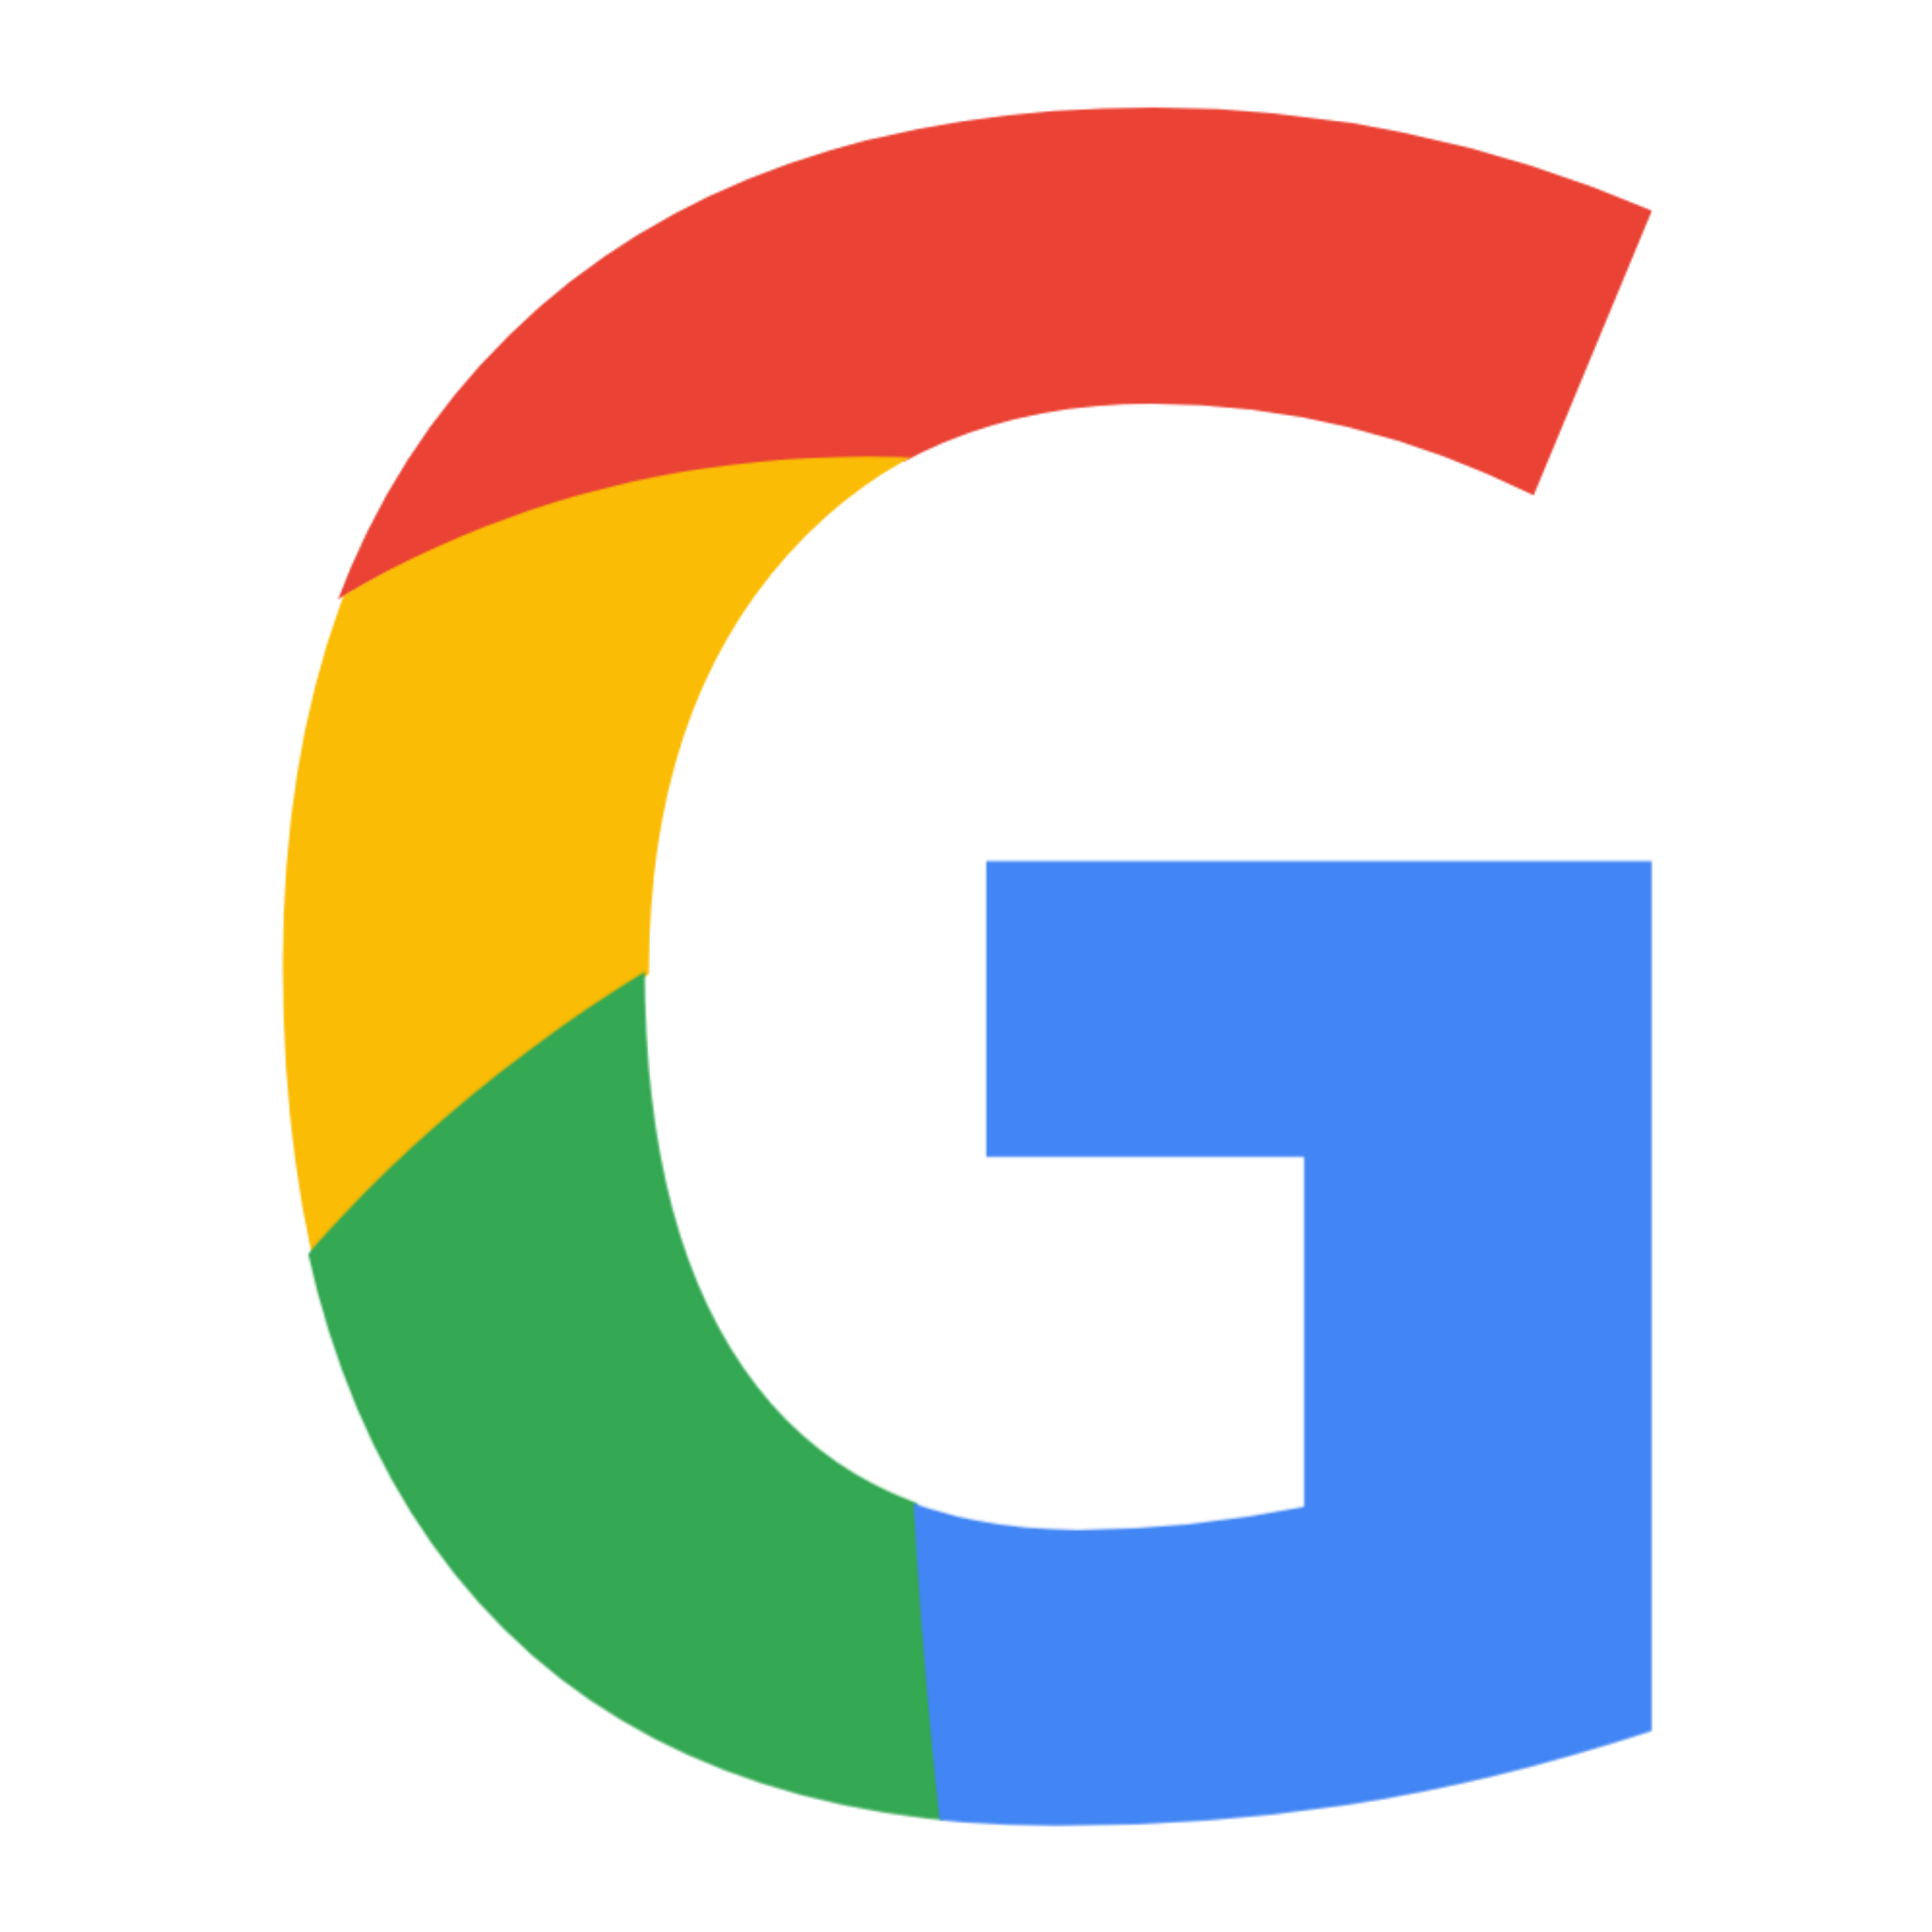 Gmail logo redesign by Nnoka Godswill Chimankpa (LegitDroid)